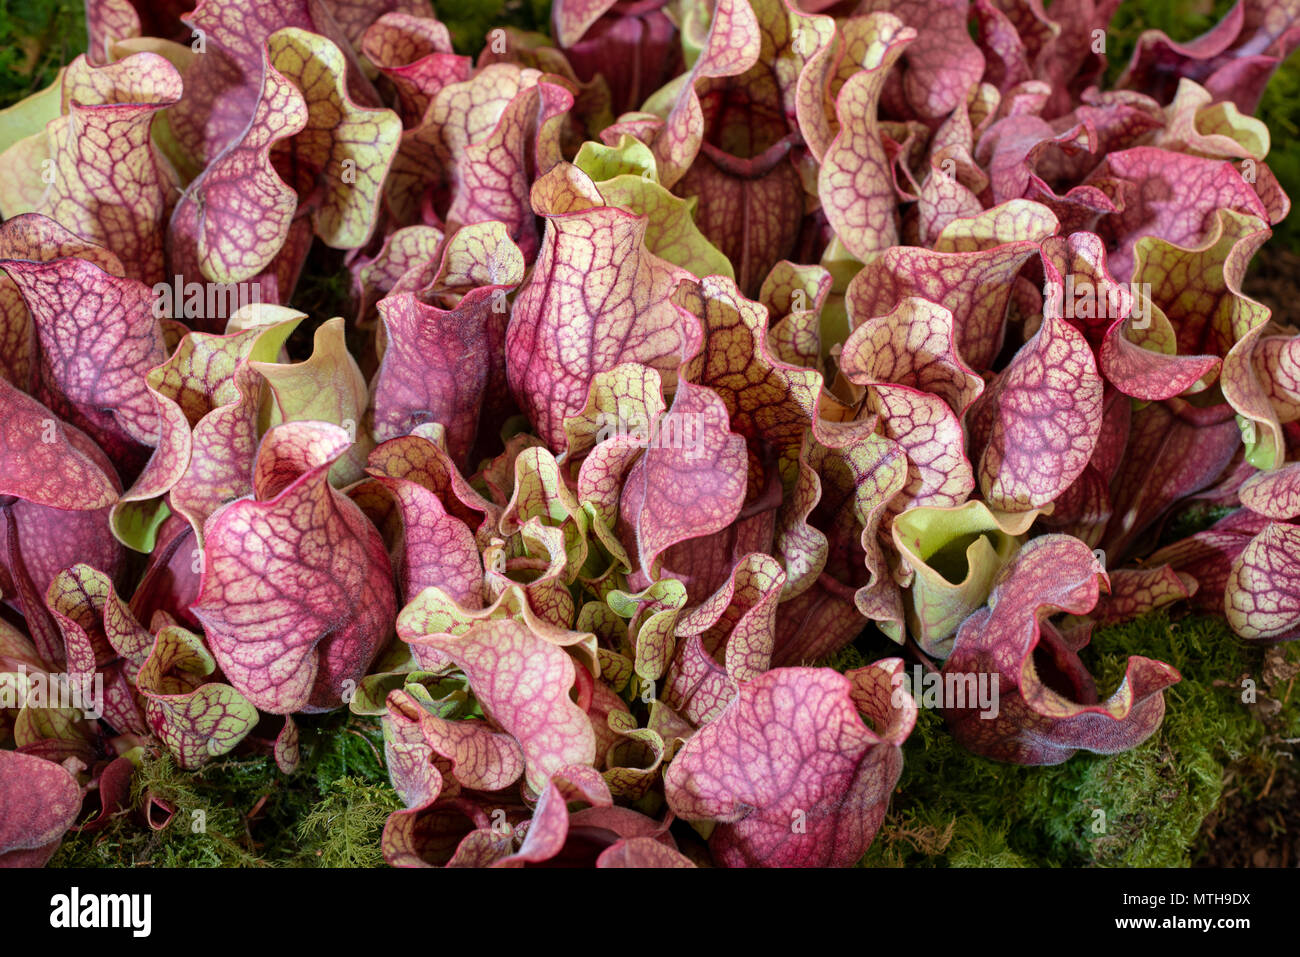 Carnivorous plants, spurpurea ssp burkei Pitcher Plant. Stock Photo